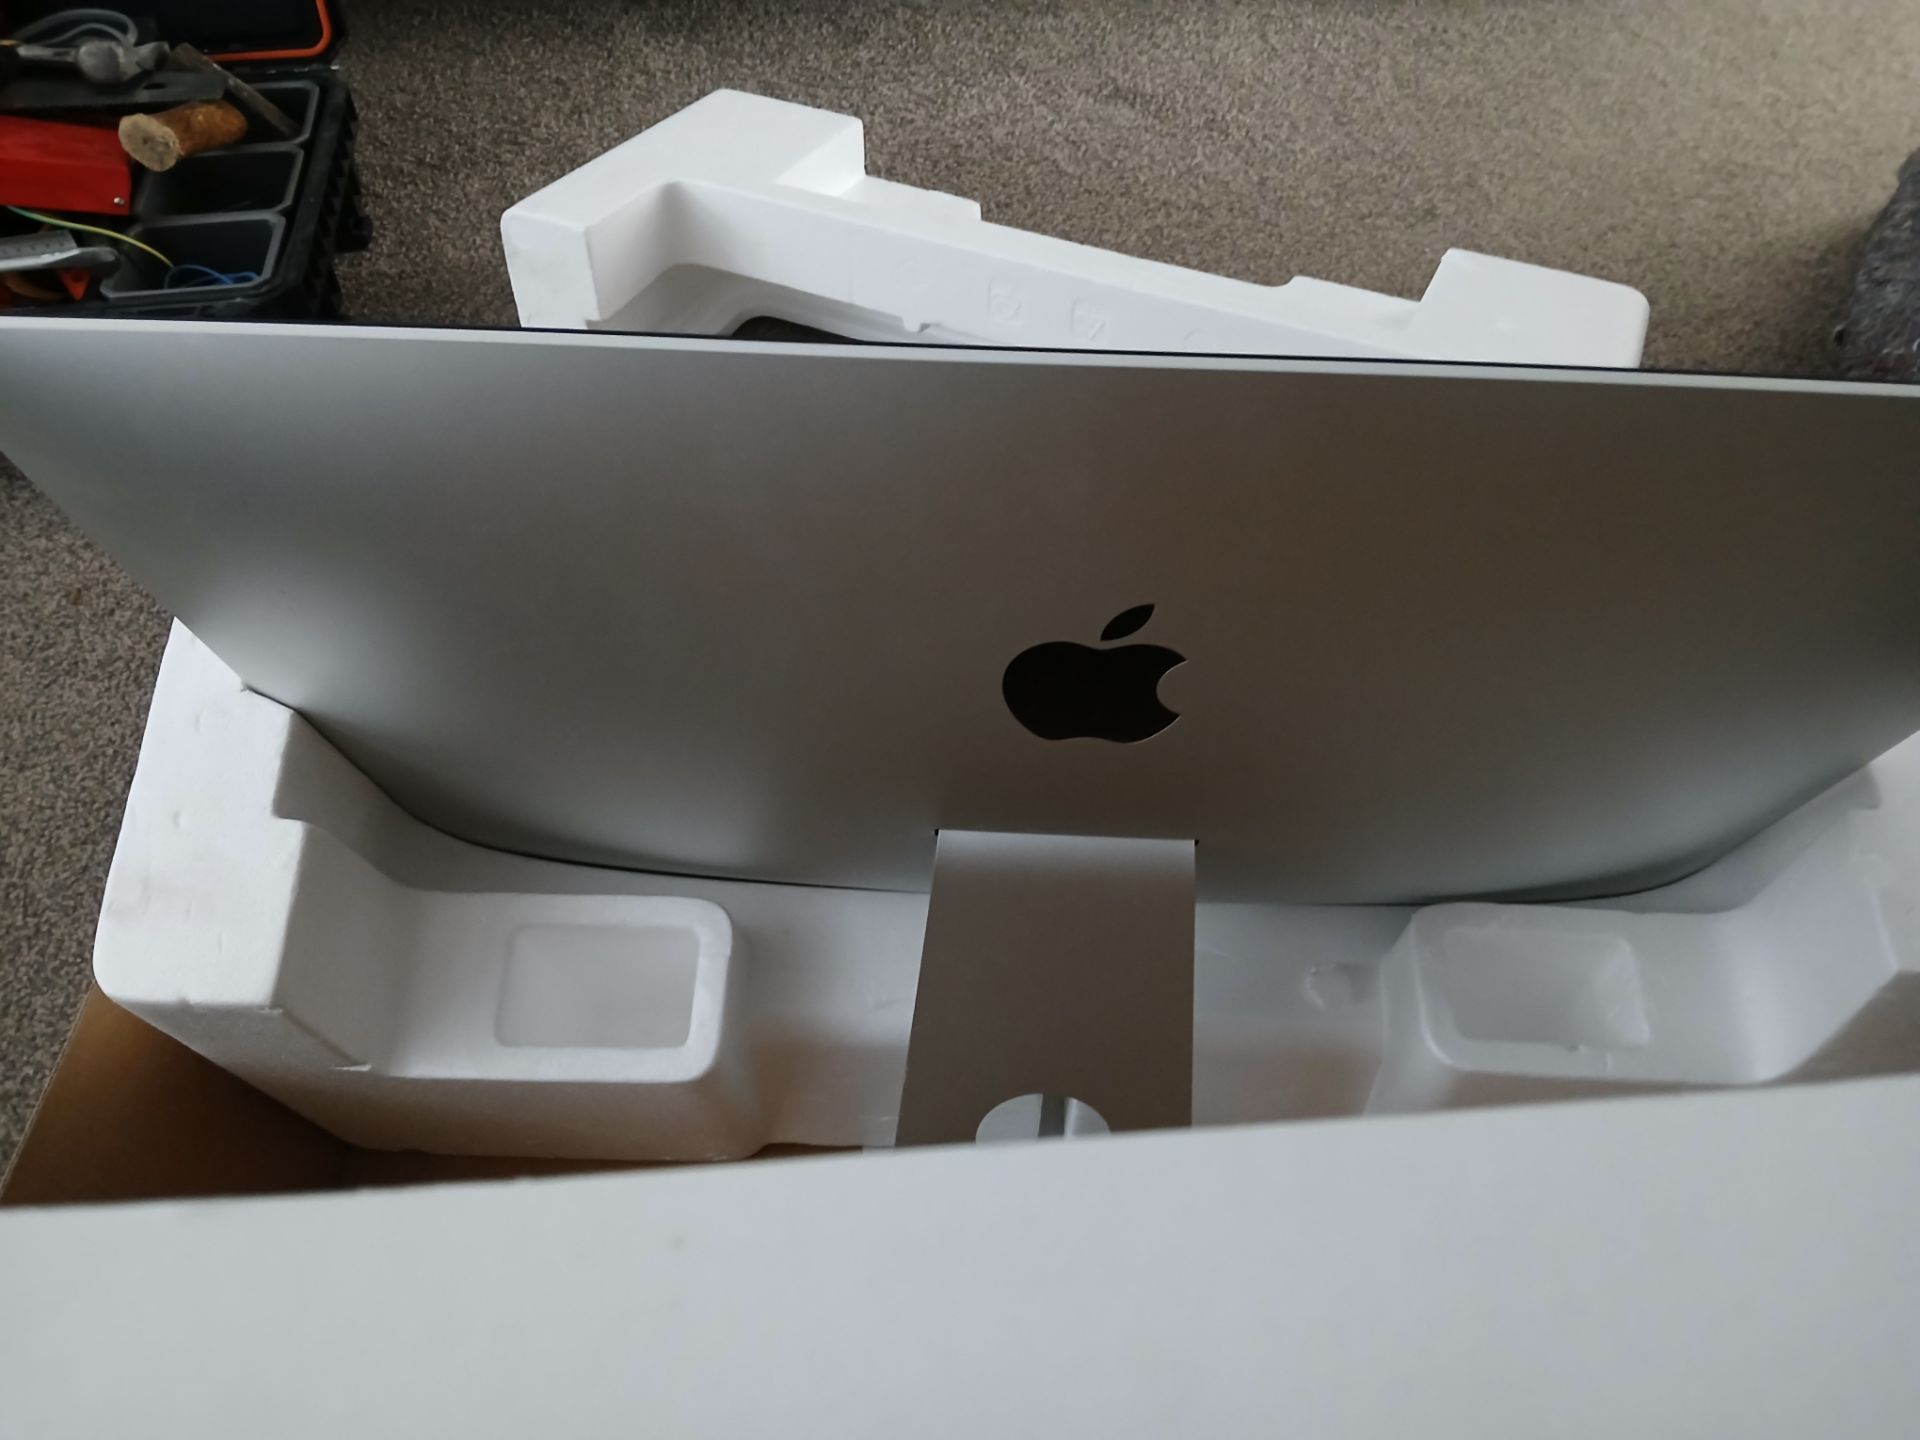 Apple iMac (Retina 5K, 27”, 2019), Serial Number DGK2HE9JV3Y (iMac only, no mouse, keyboard, or - Image 13 of 14